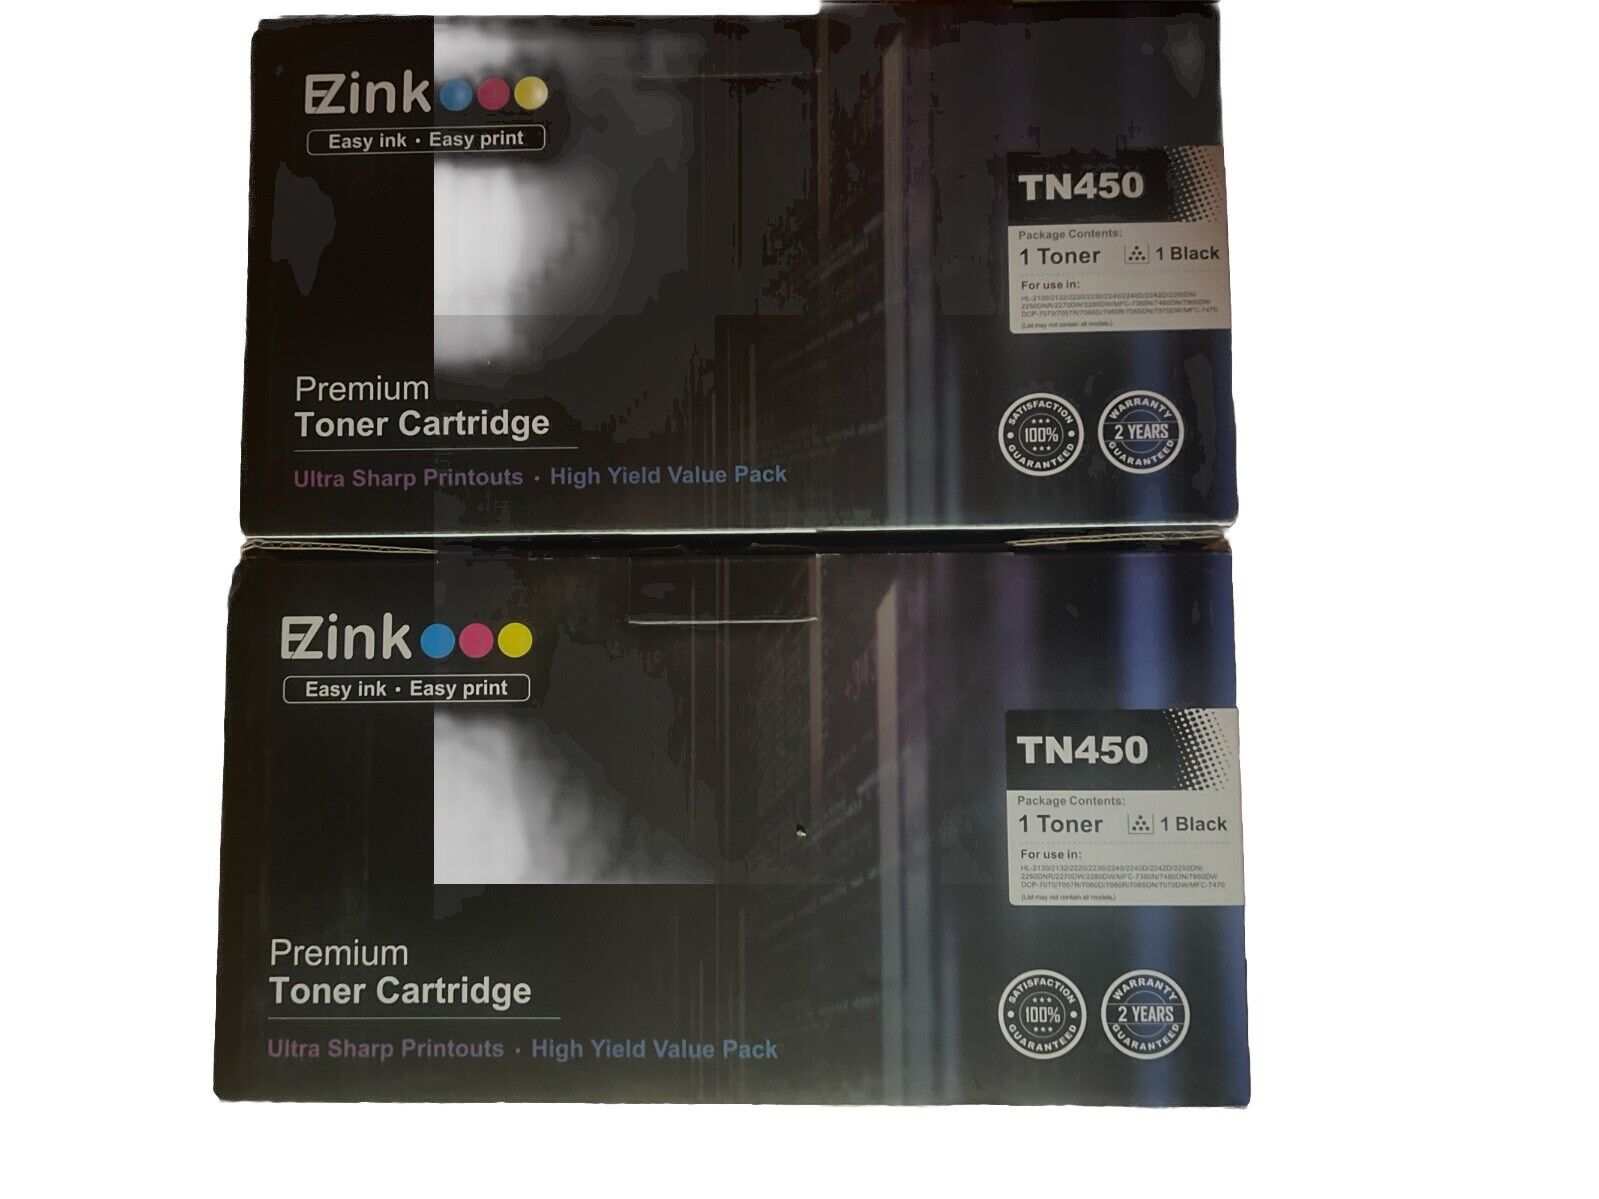 E-Z ink Premium Toner Cartridge TN450 Replacement (2 PCS, Black) Brand New